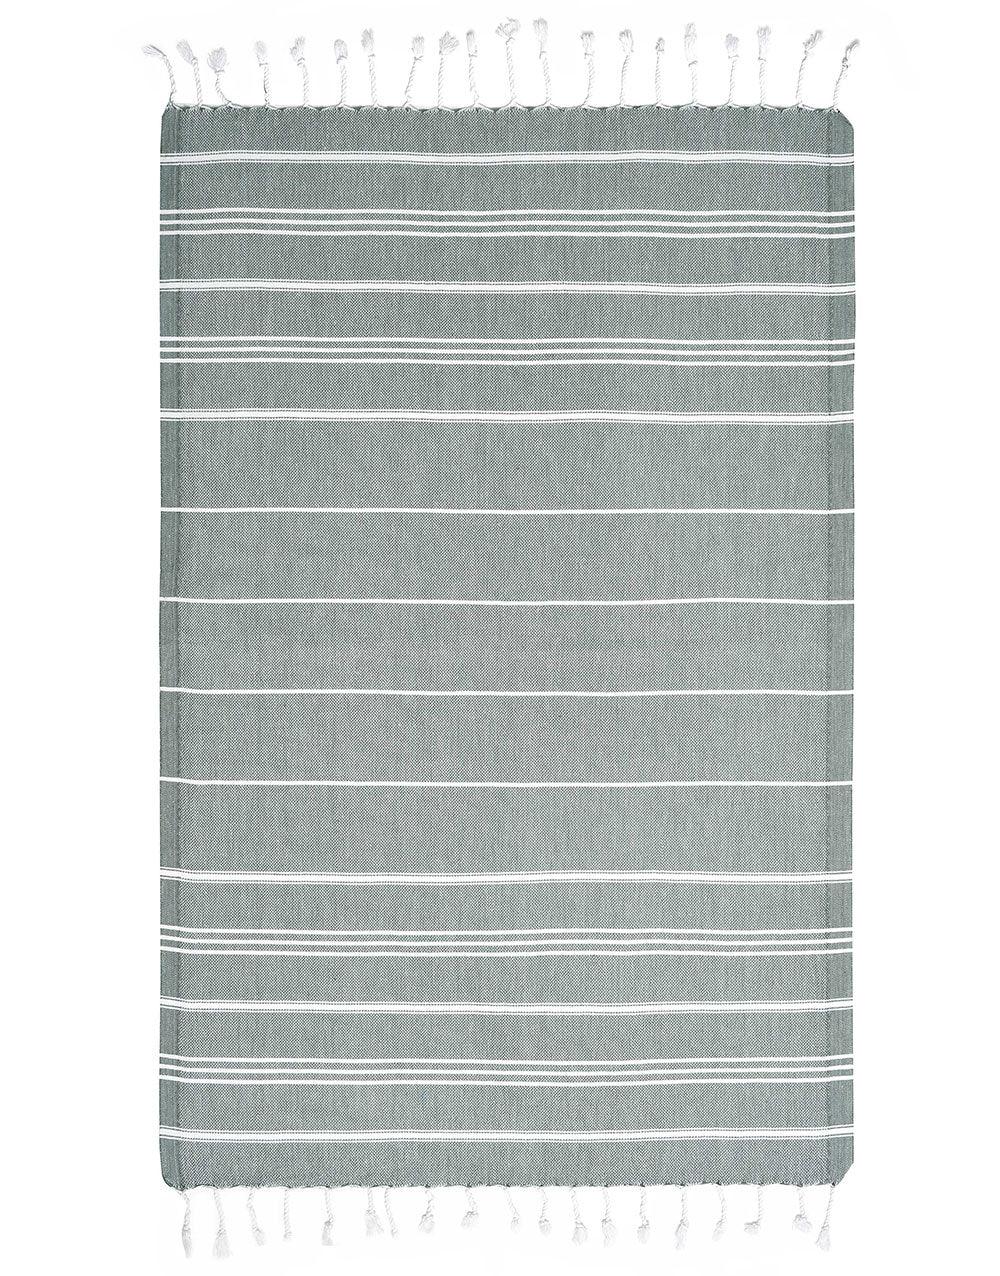 Cacala Hand Towel Set 4 Peskir 60 x 90 cm Antrasit 100% Turkish Cotton - Cacala